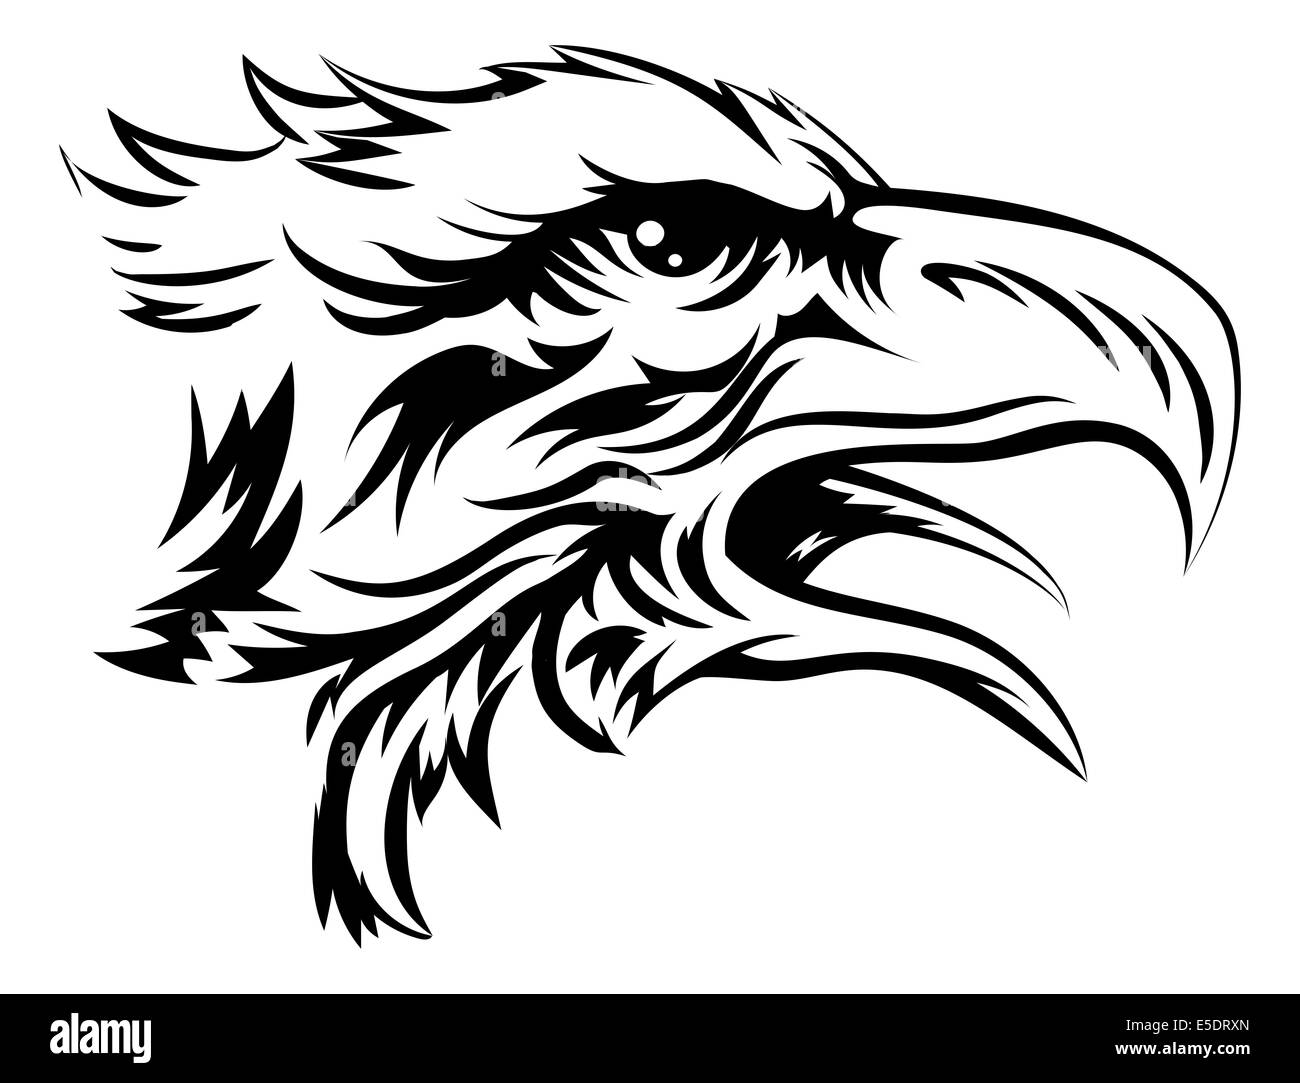 Adlerkopf wie ein Adler oder anderen Greifvogel Stockfoto